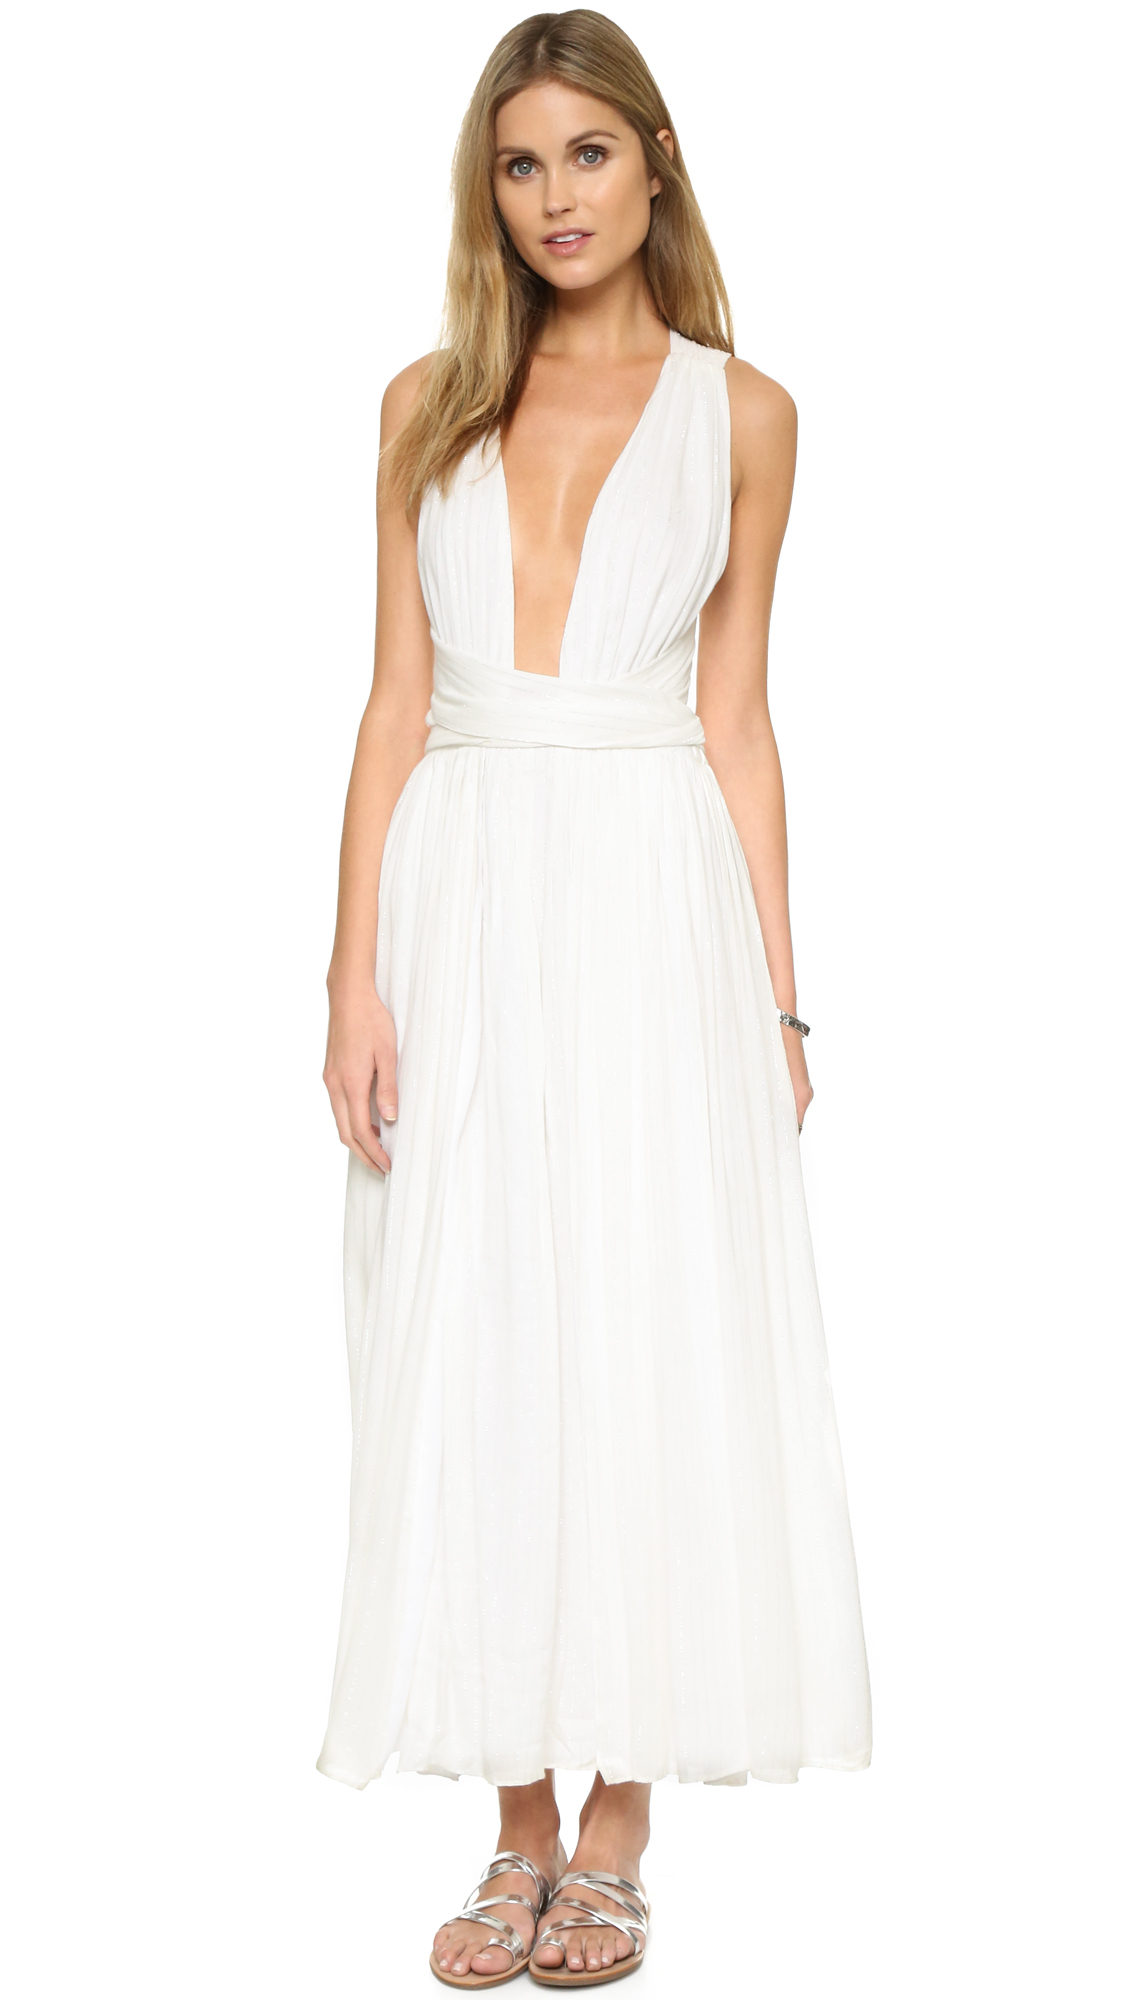 Lyst - Mara Hoffman Wrap Top Dress in White